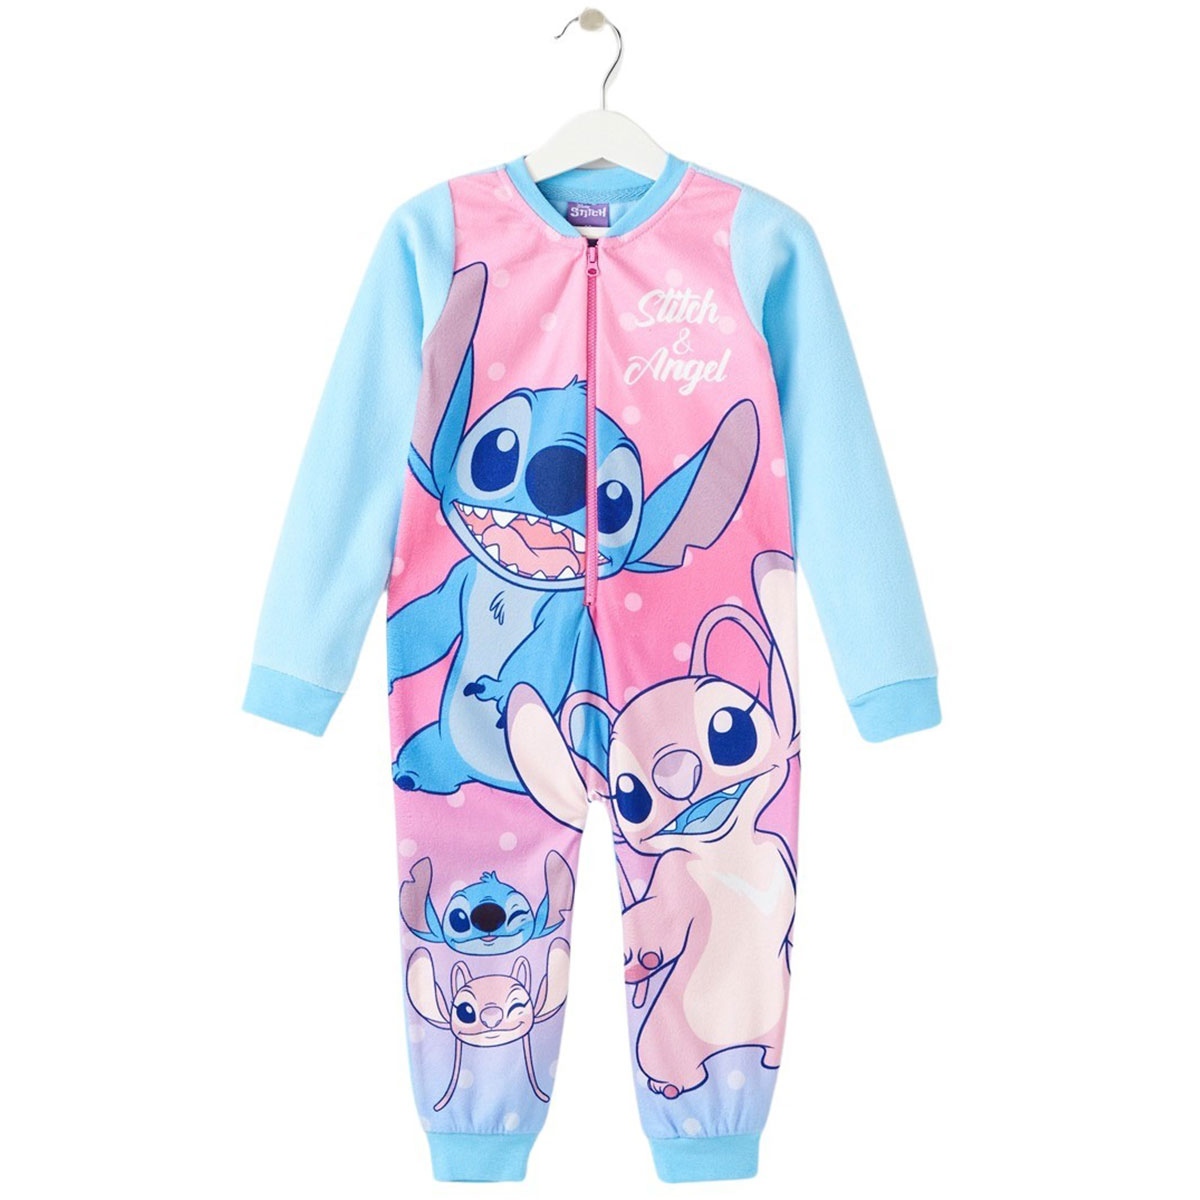 Combinaison Pyjama Angel Enfant